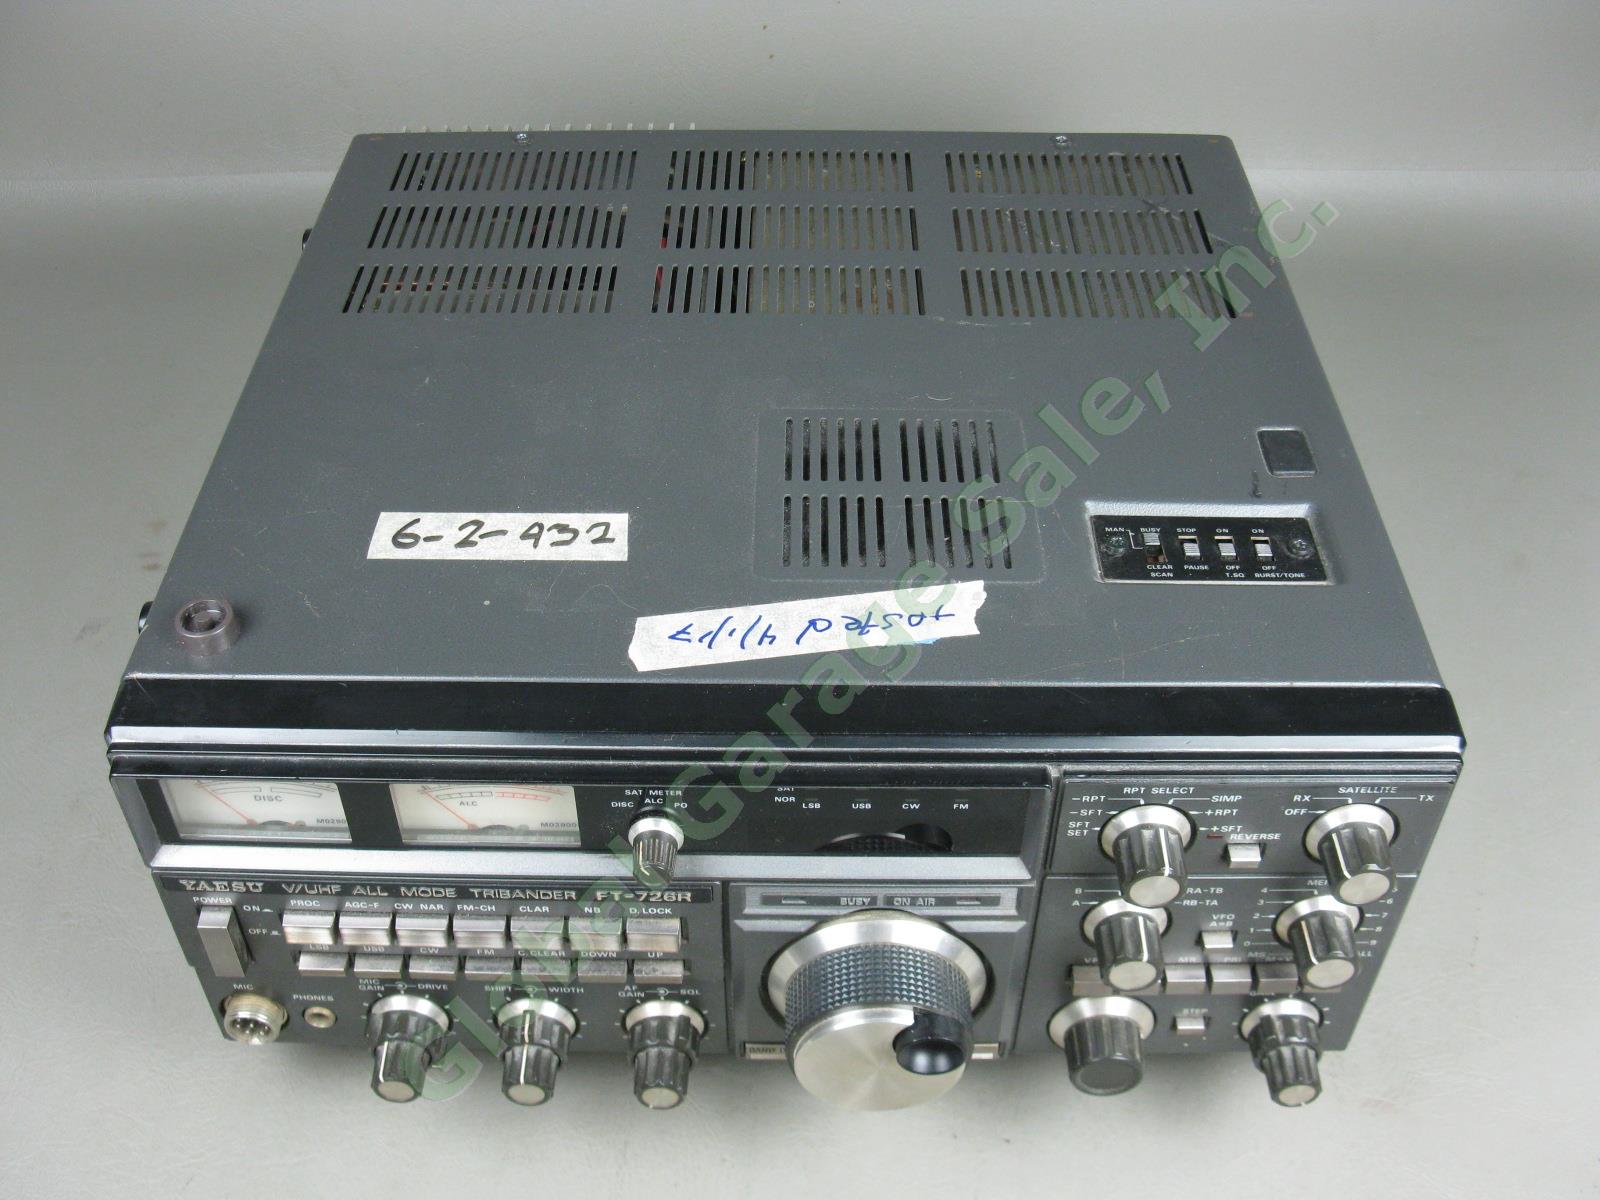 Yaesu FT-726R V/UHF All Mode Tribander Ham Radio Transceiver + YM-48 Mic Tested+ 1